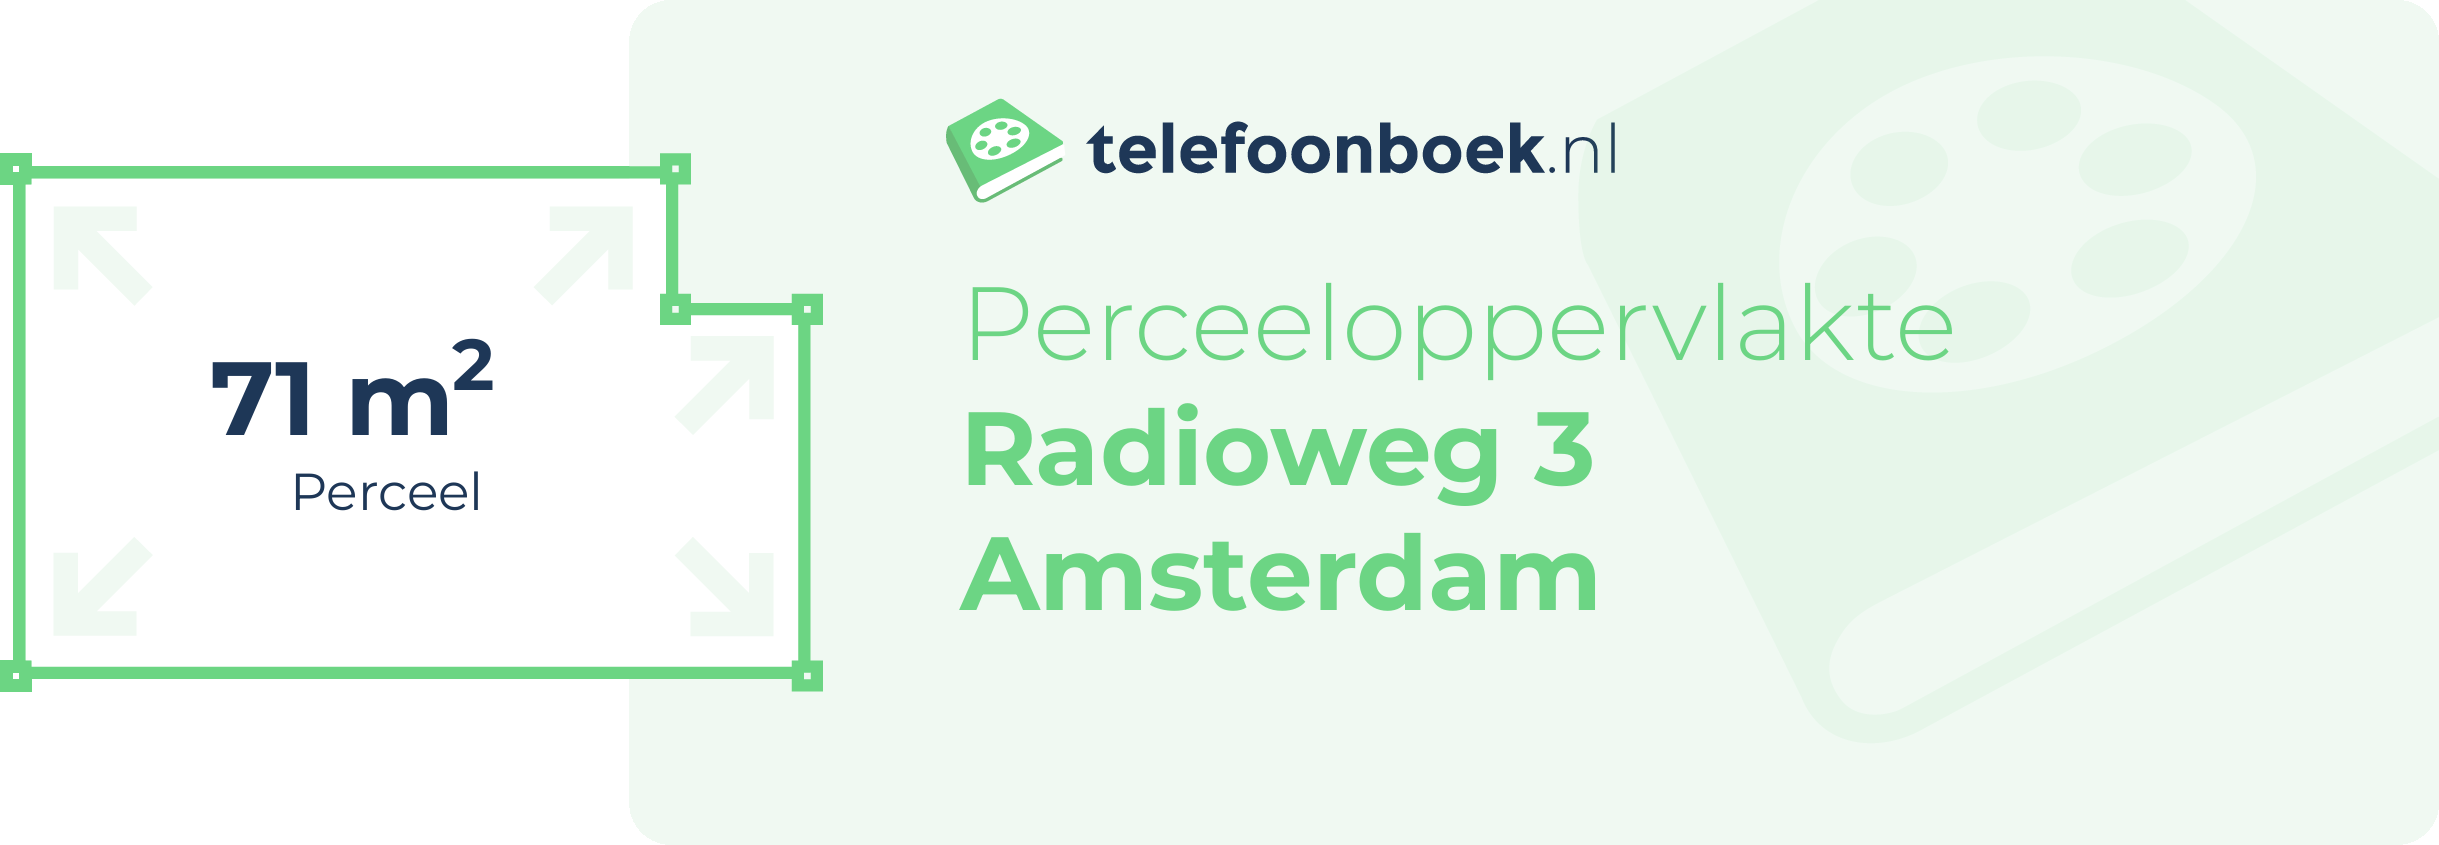 Perceeloppervlakte Radioweg 3 Amsterdam